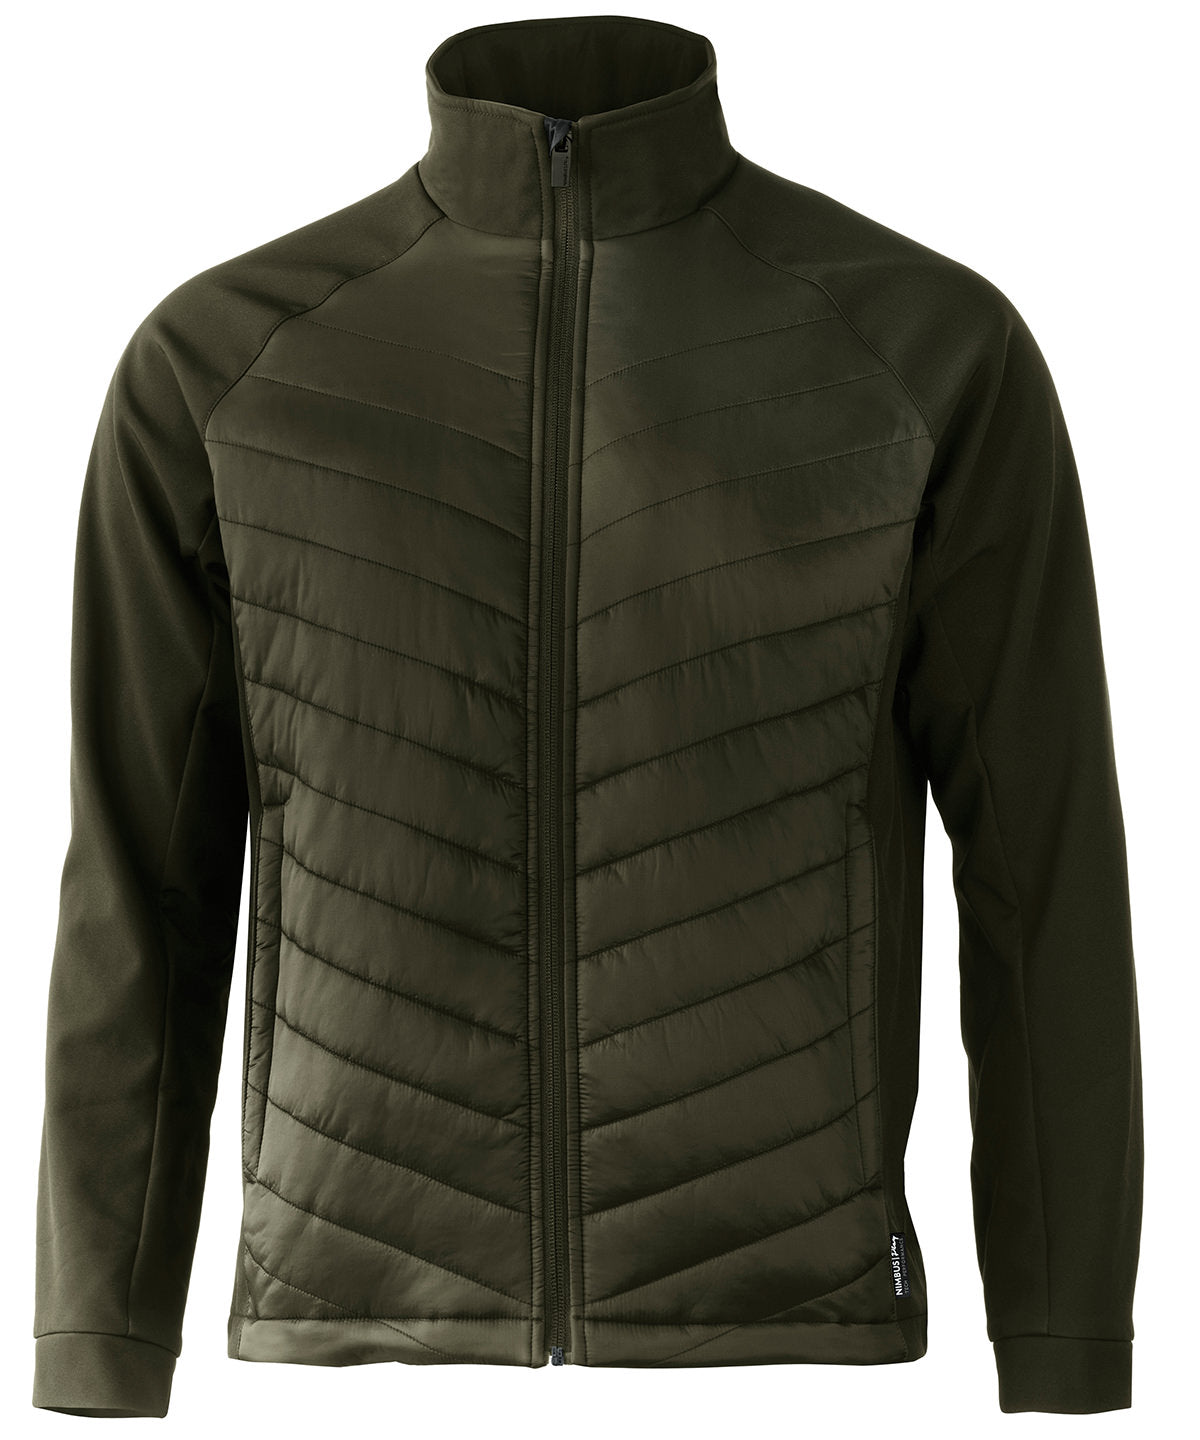 Bloomsdale  comfortable hybrid jacket